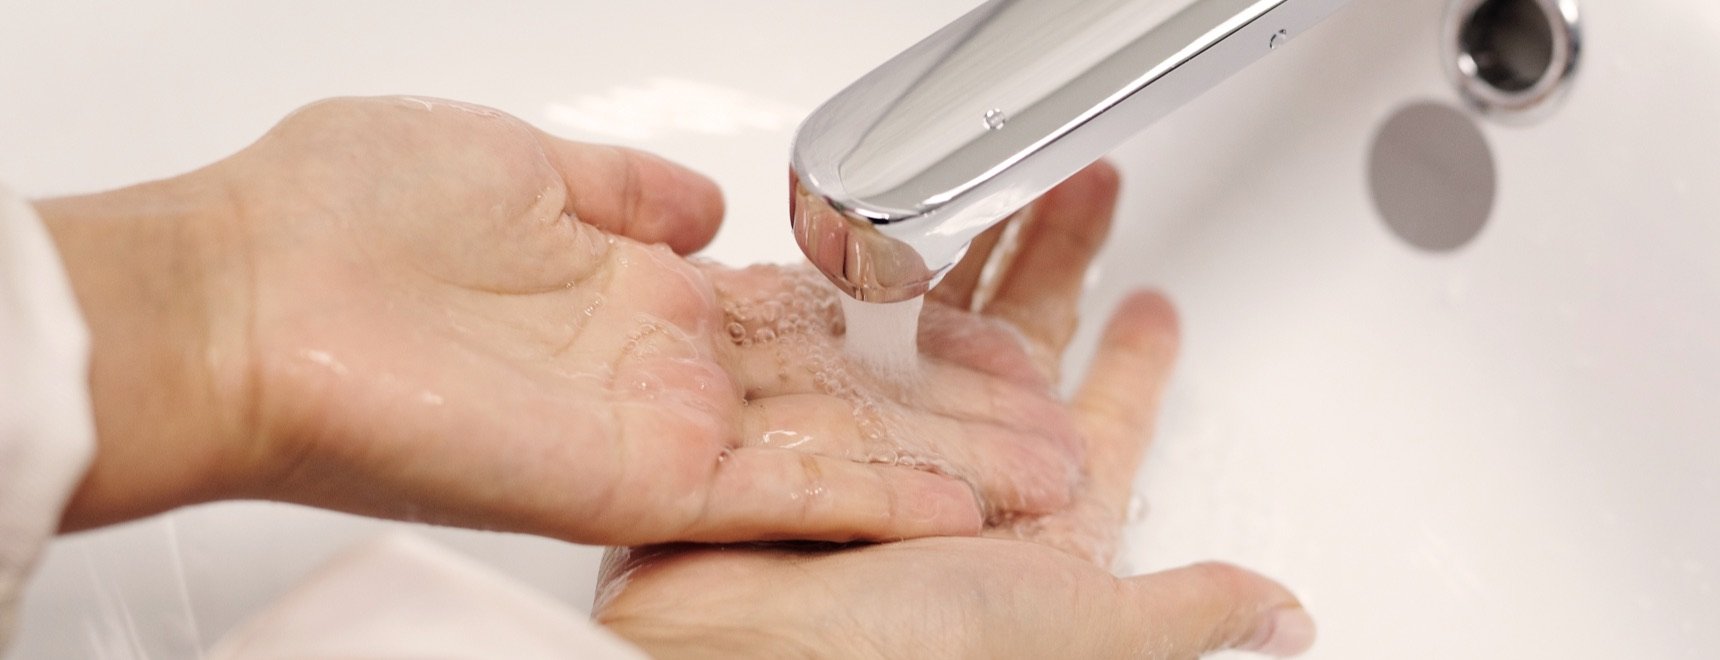 Washing-hand